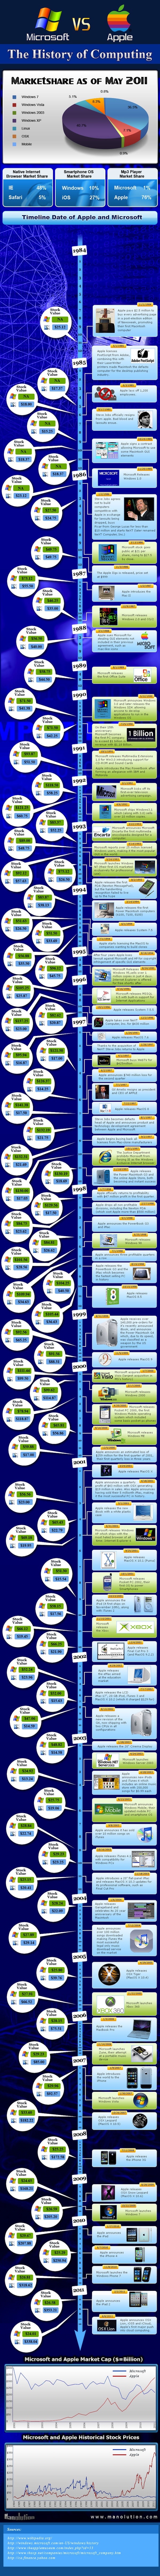 Microsoft vs. Apple: The History Of Computing [Infographic]